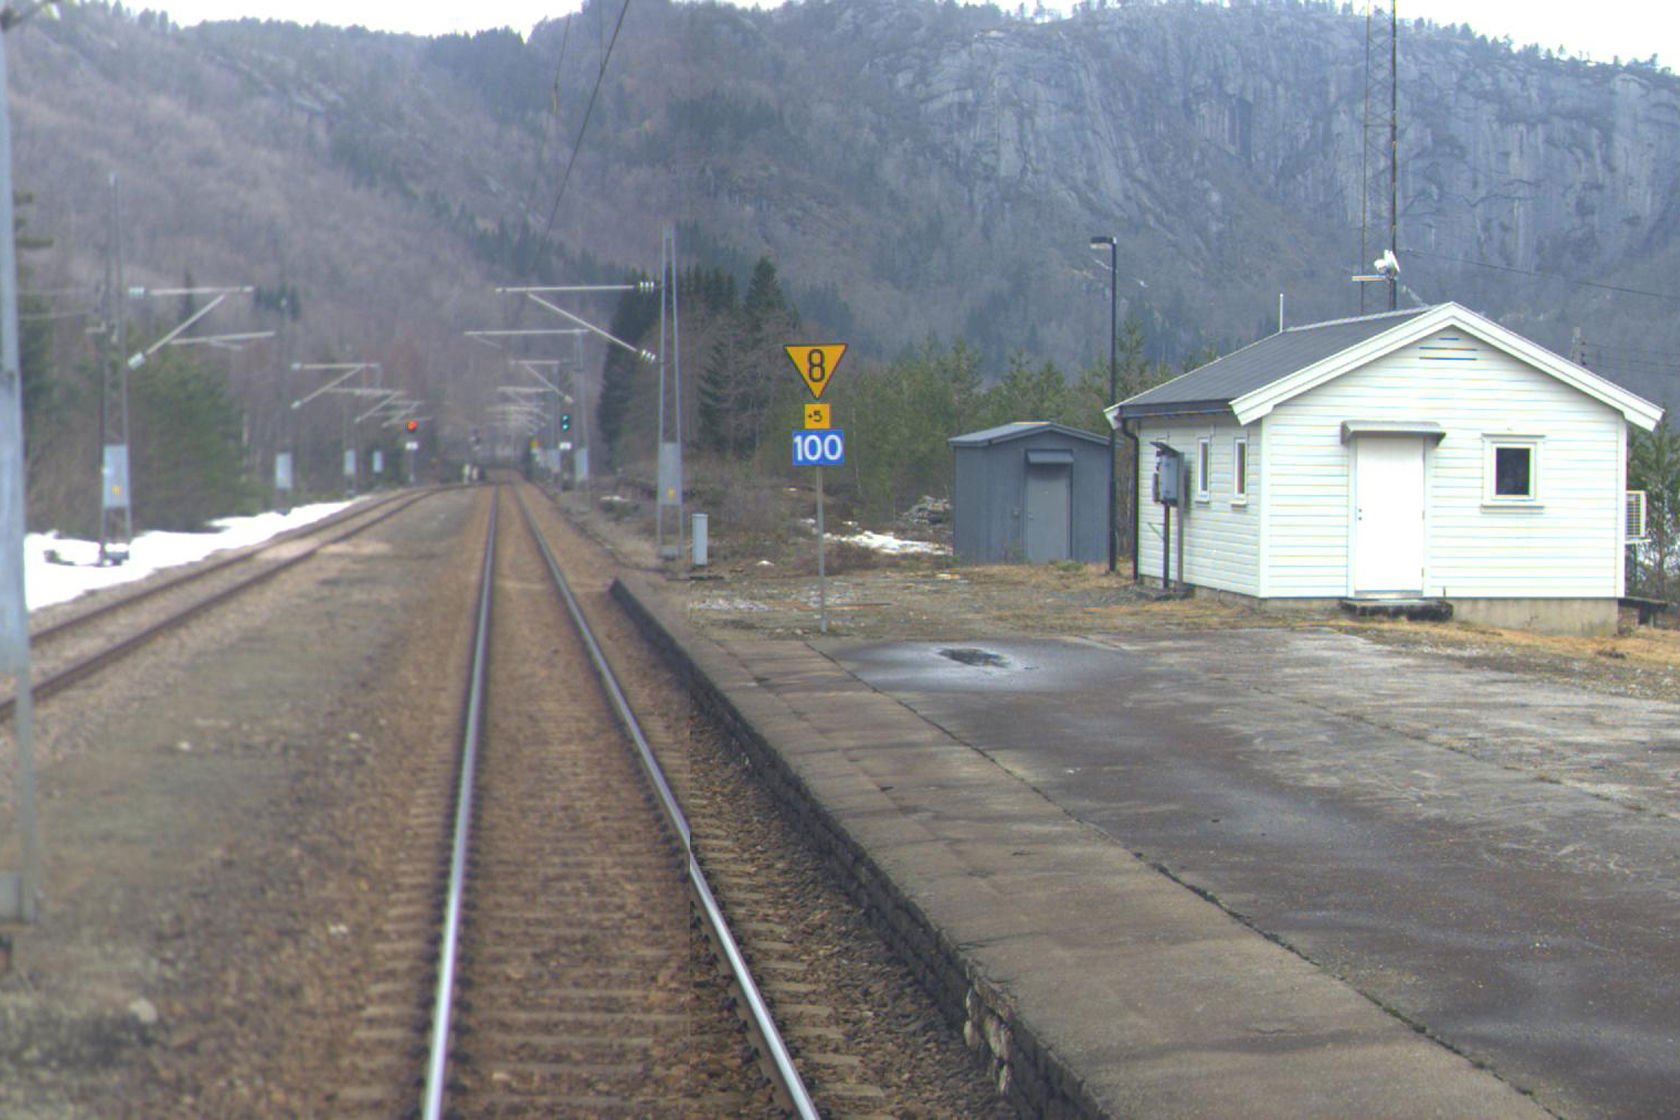 Tracks and building at Sandvatn station